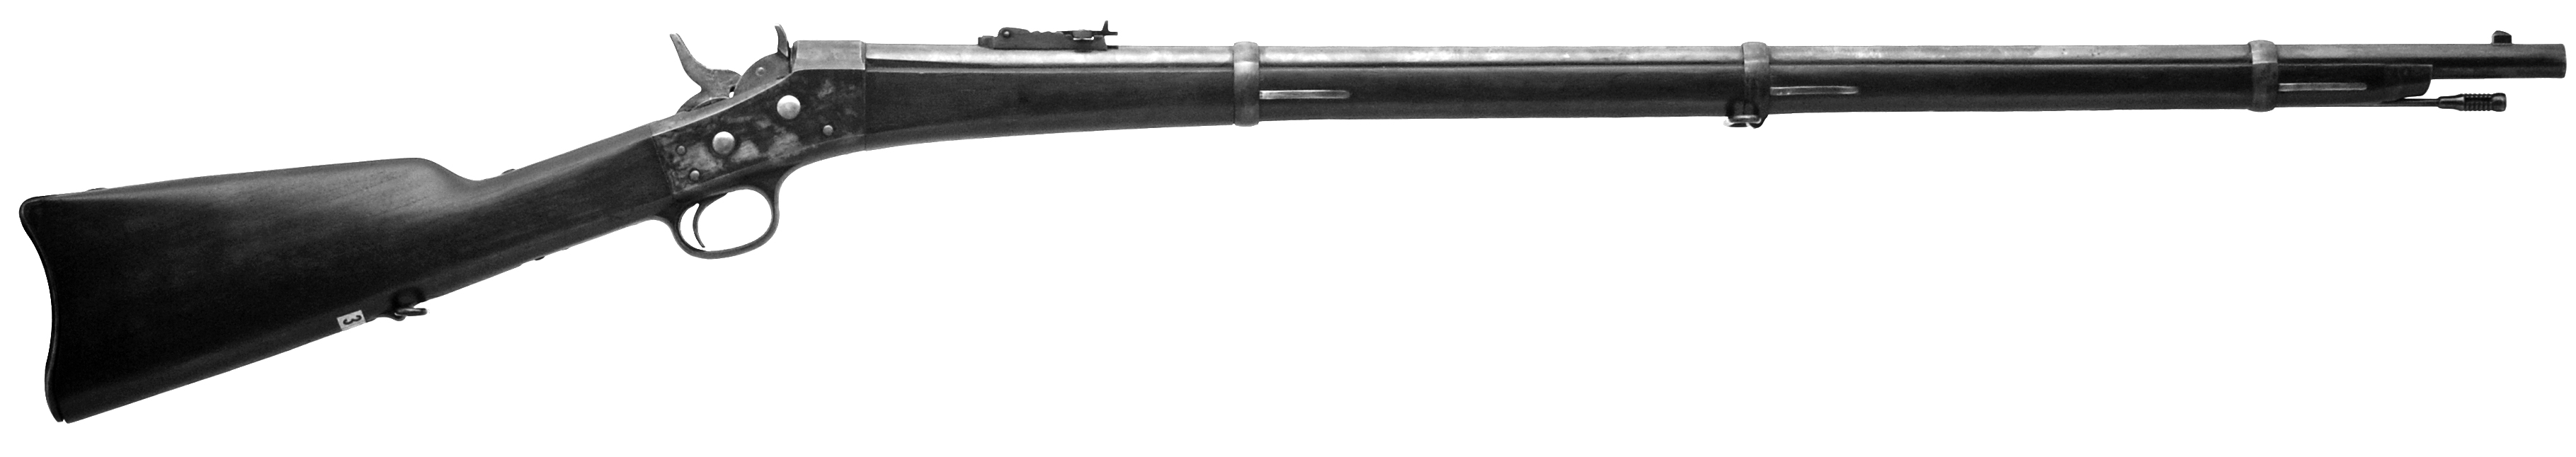 Remington Spanish Model